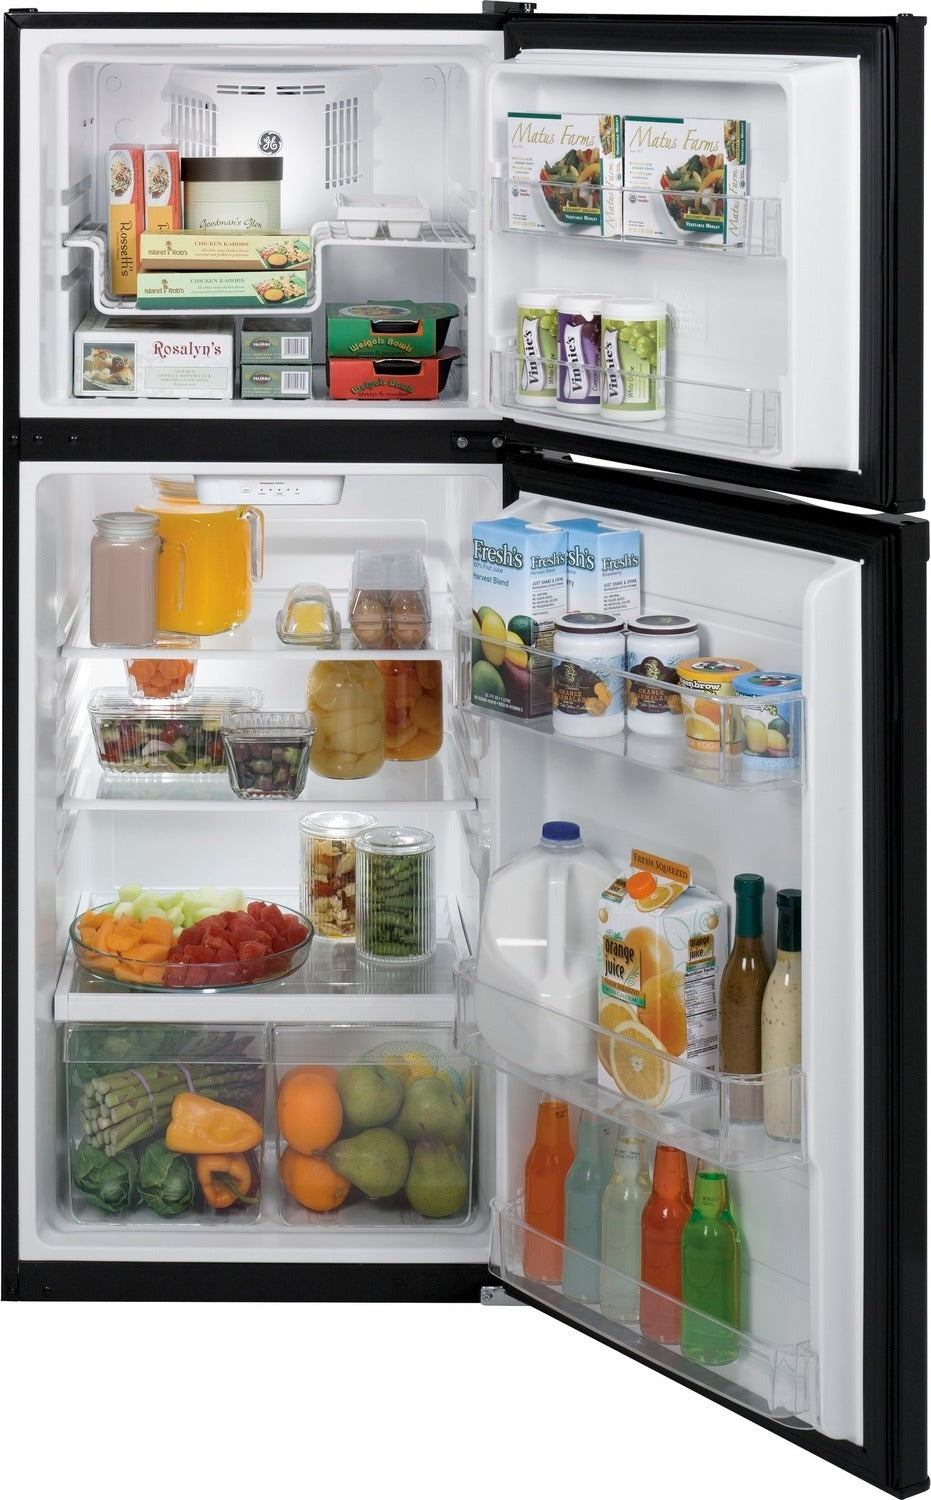 GE Black Top-Freezer Refrigerator (11.55 Cu. Ft.) - GPE12FGKBB